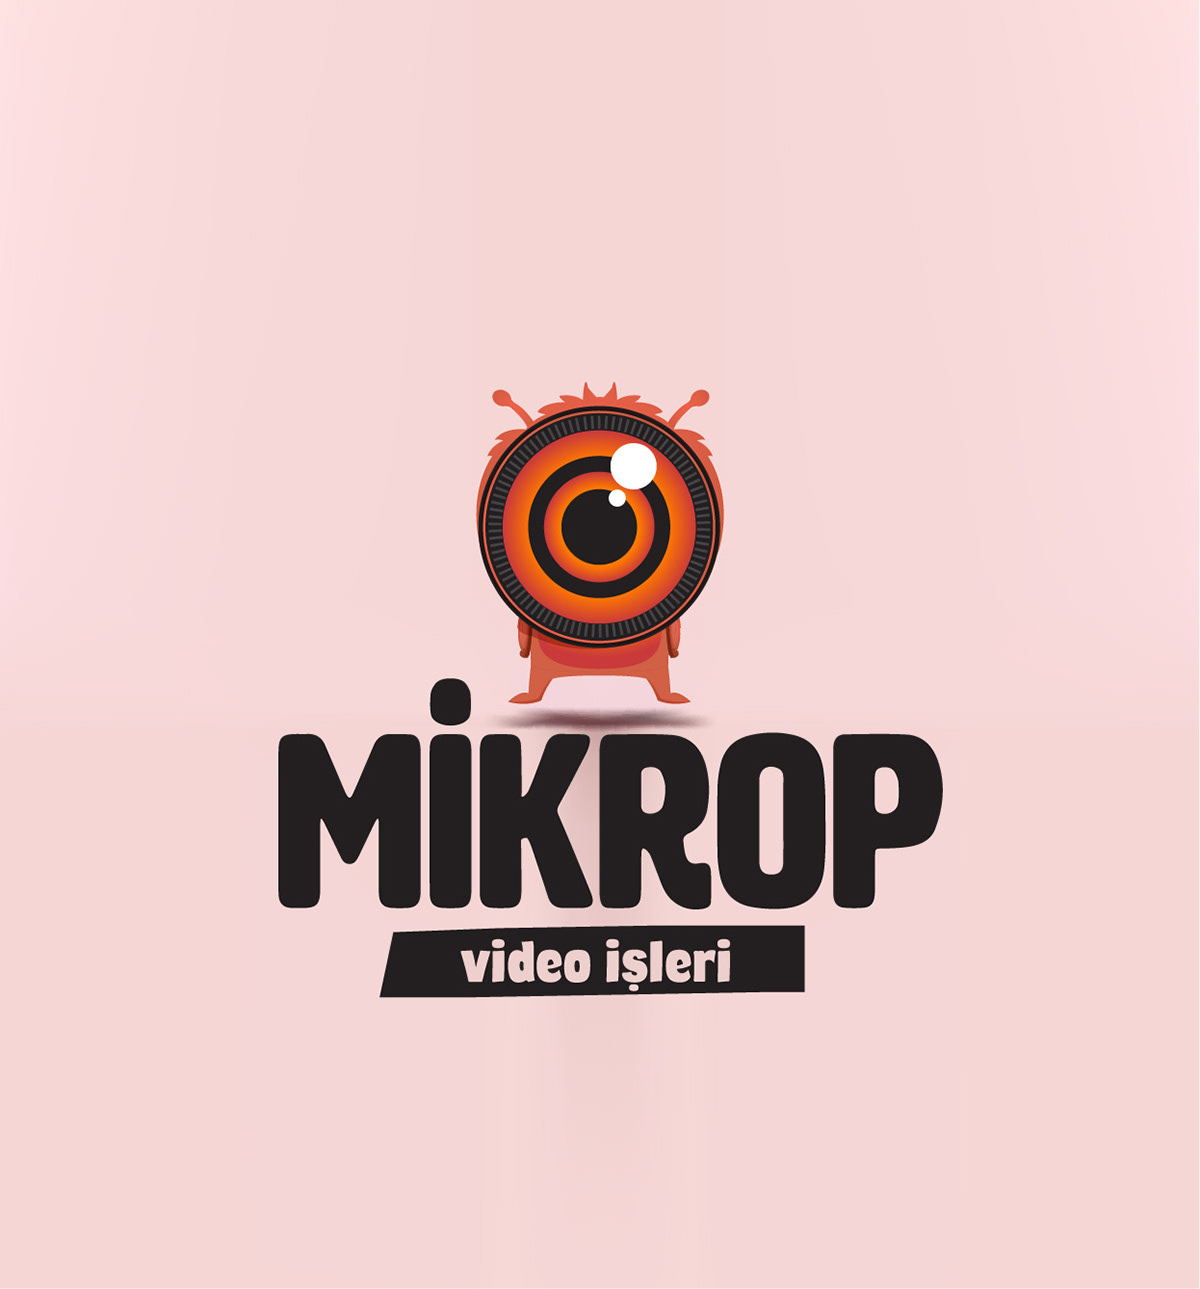 mikrop video isleri atilla karabay akarabay logo